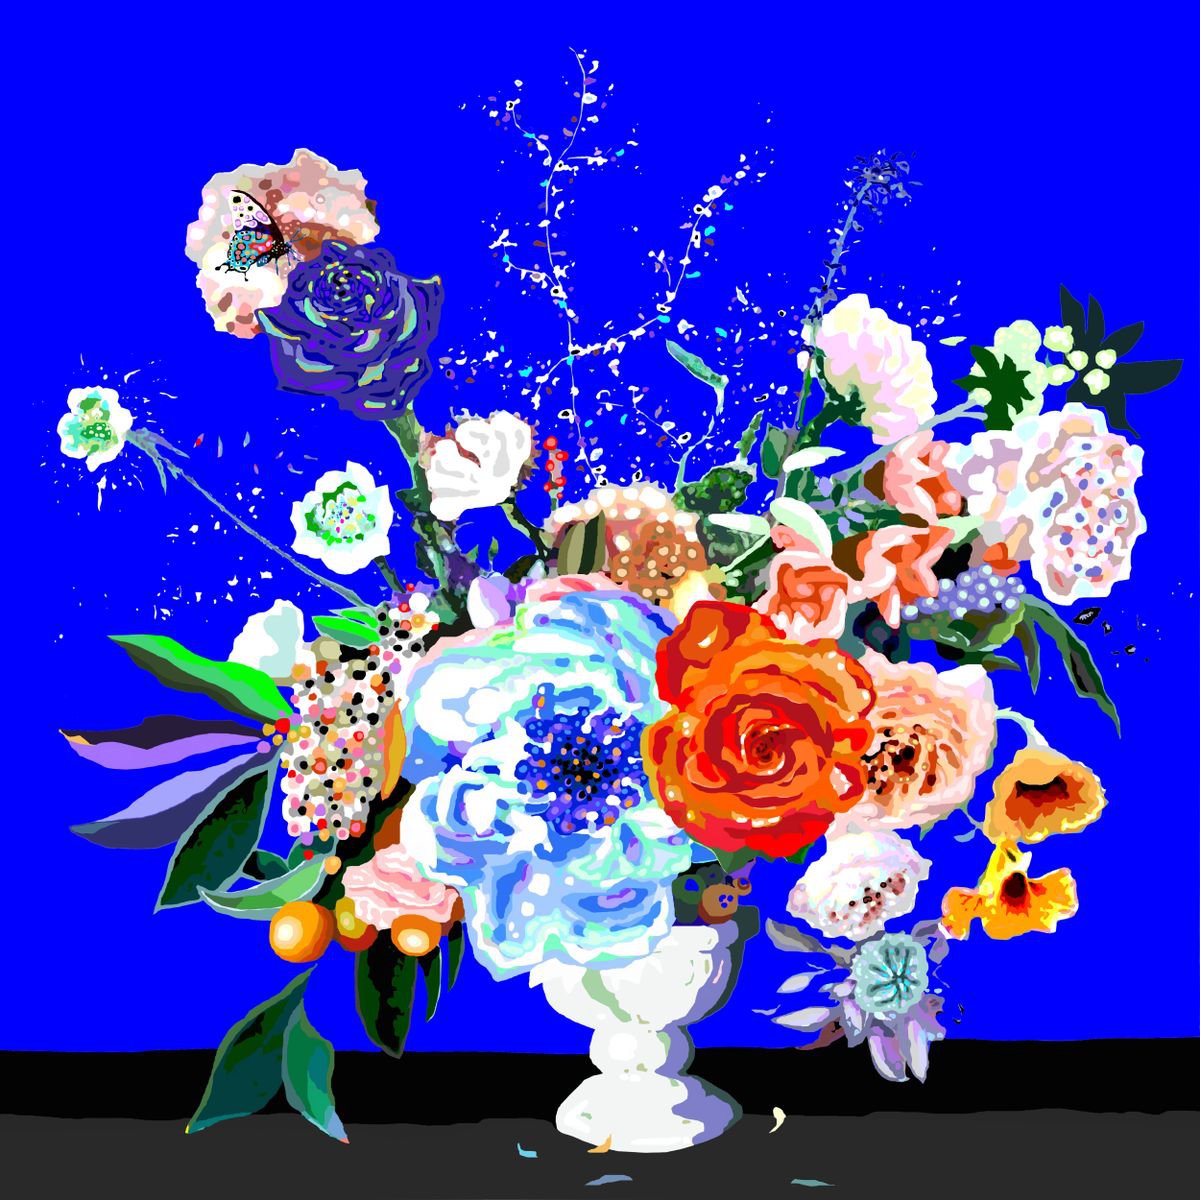 Flowers II/ Flores II (pop art, floral) by Alejos - Pop Art landscapes